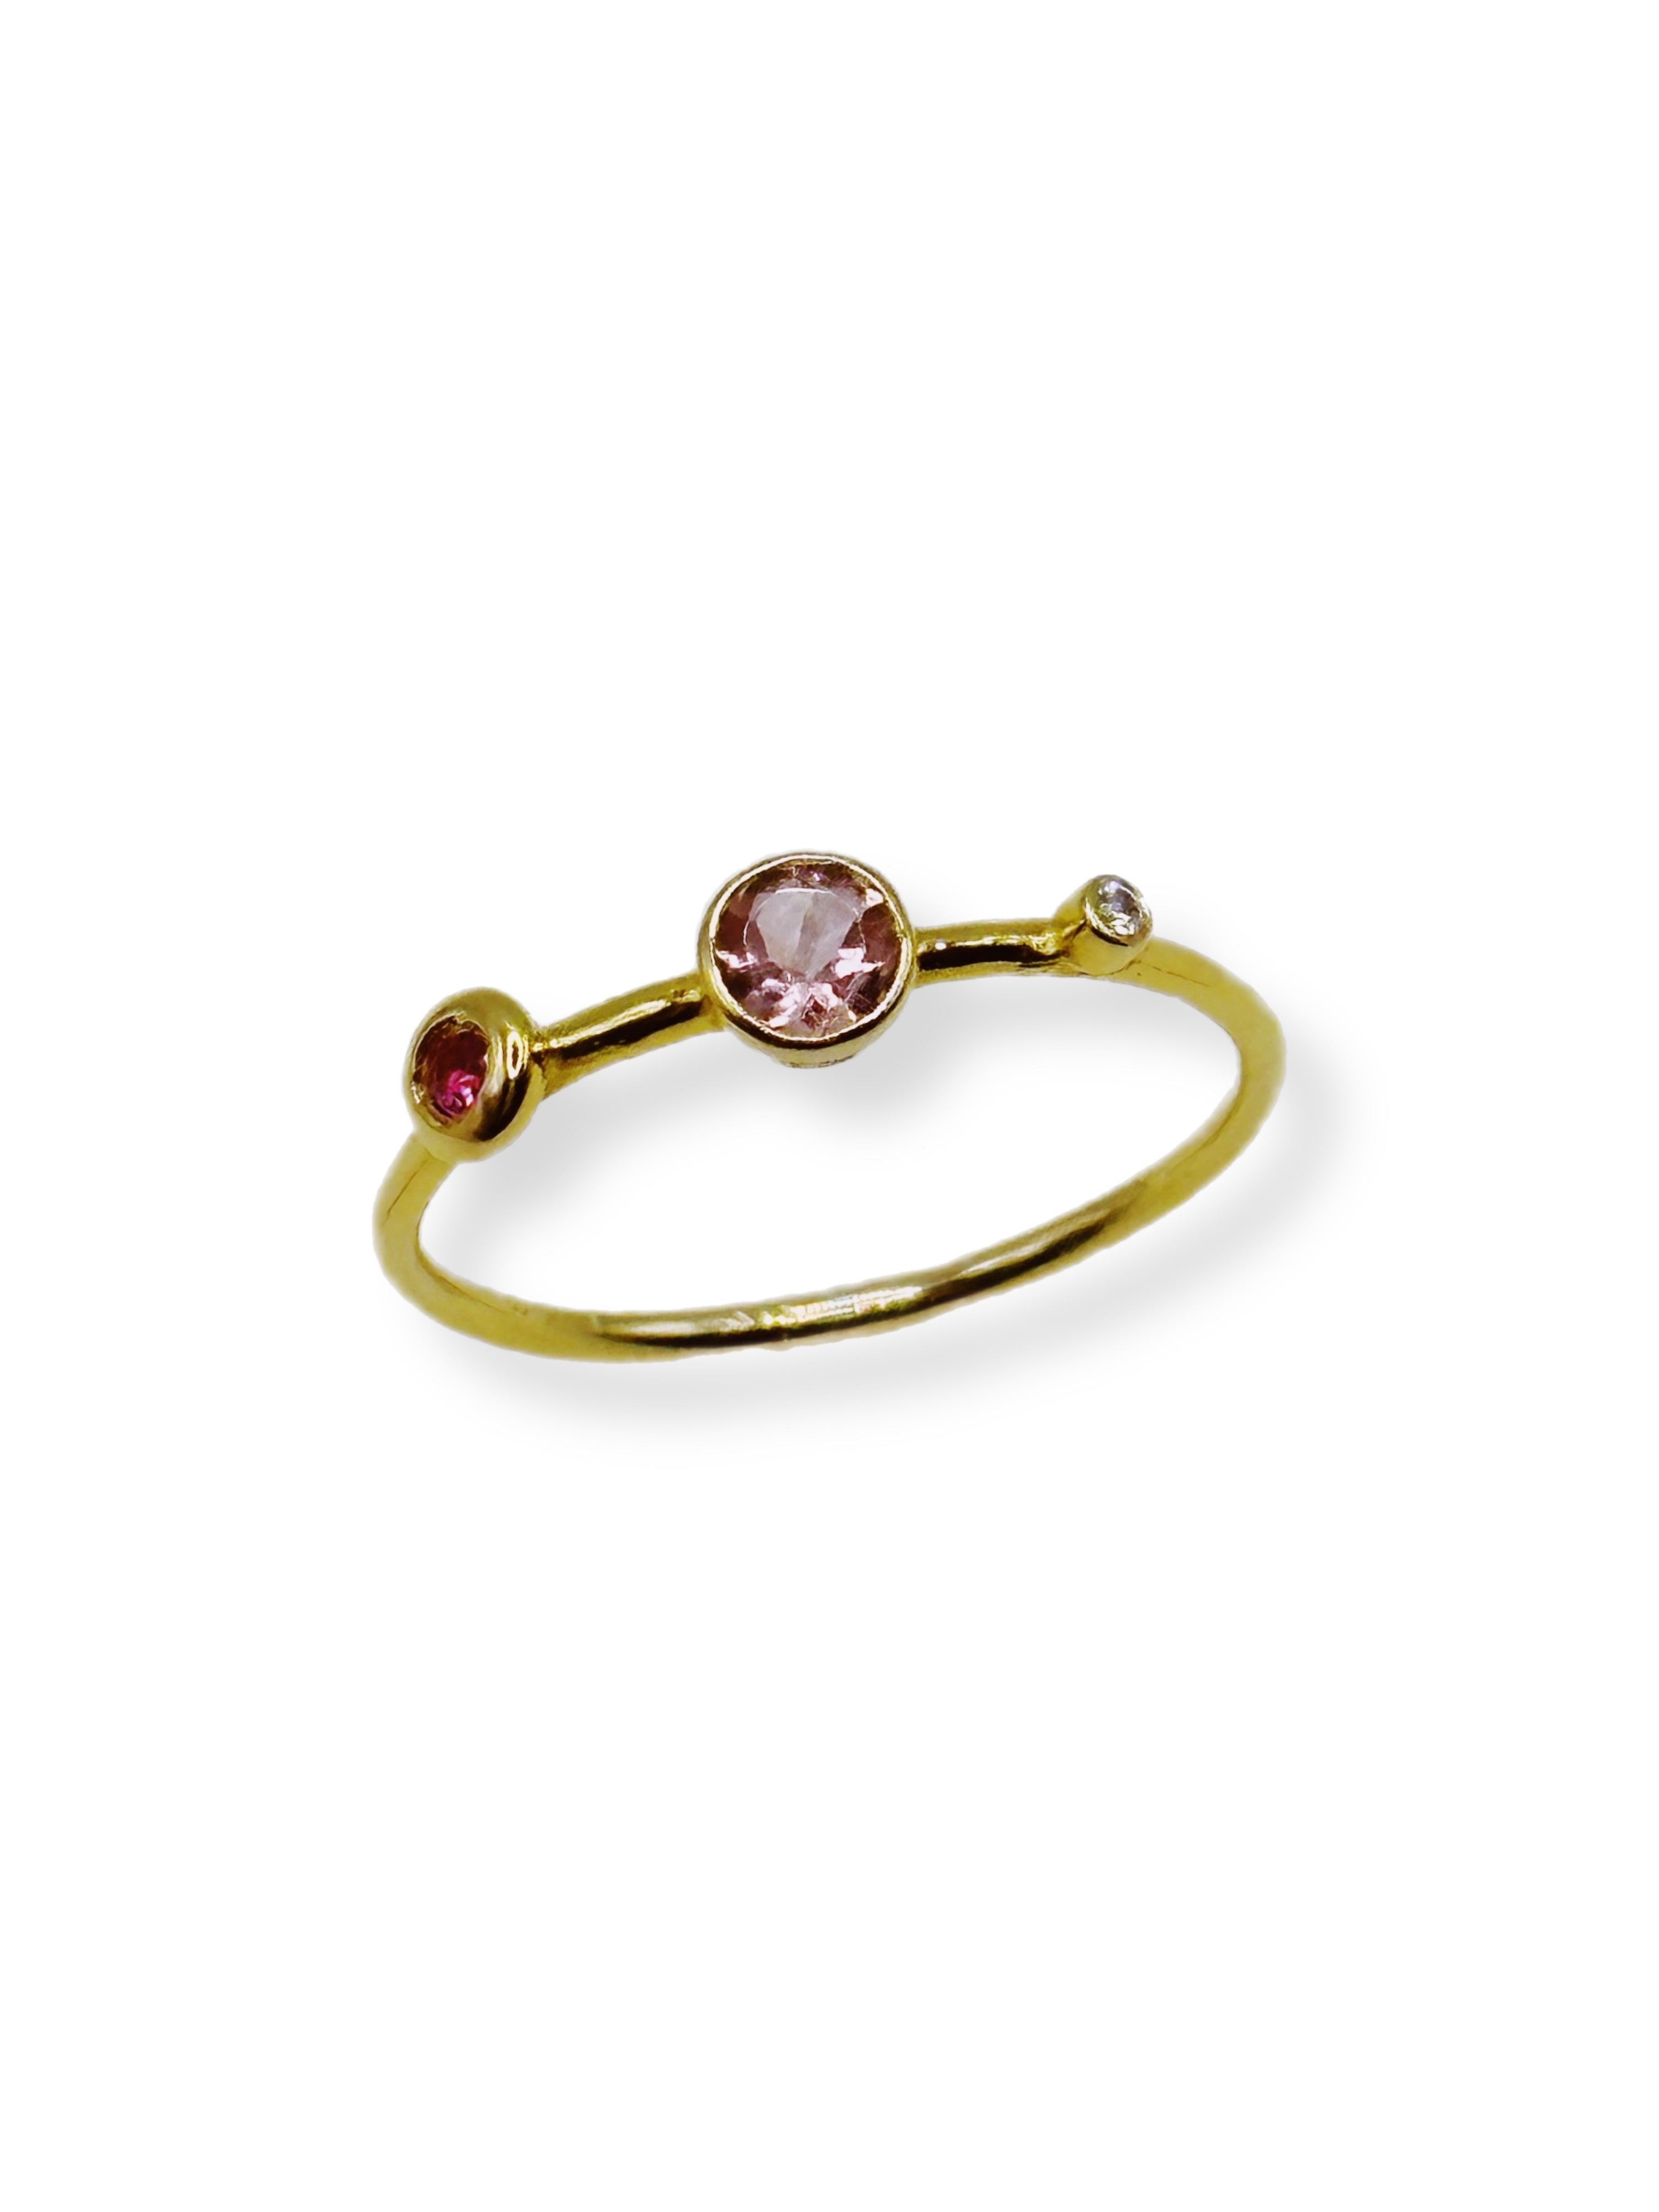 Pink Sapphire, Tourmaline, and Diamond Ring